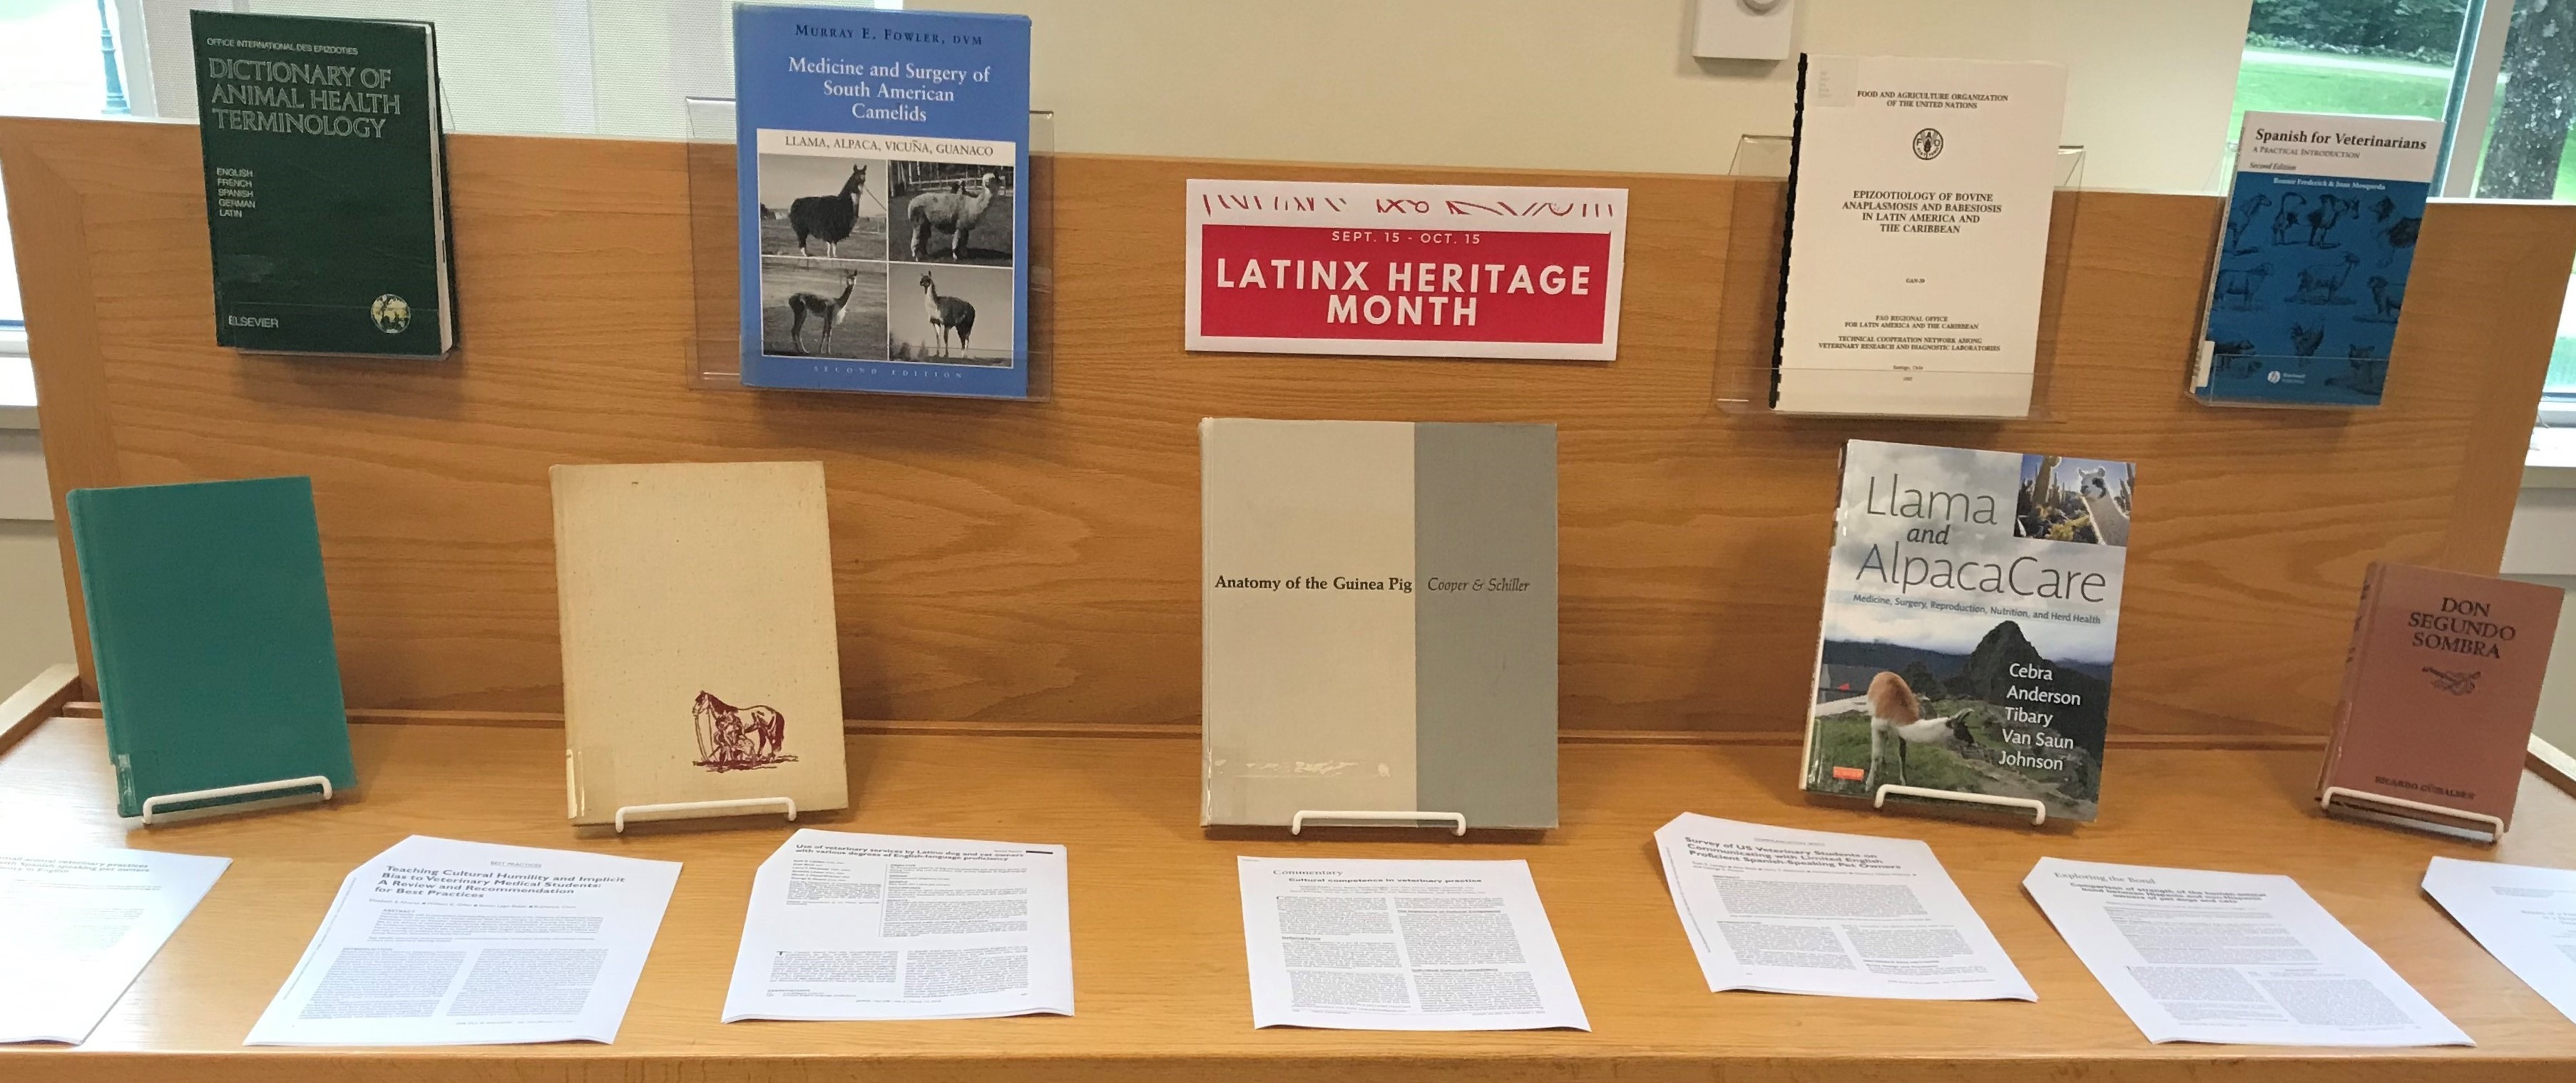 Latinx Heritage Display